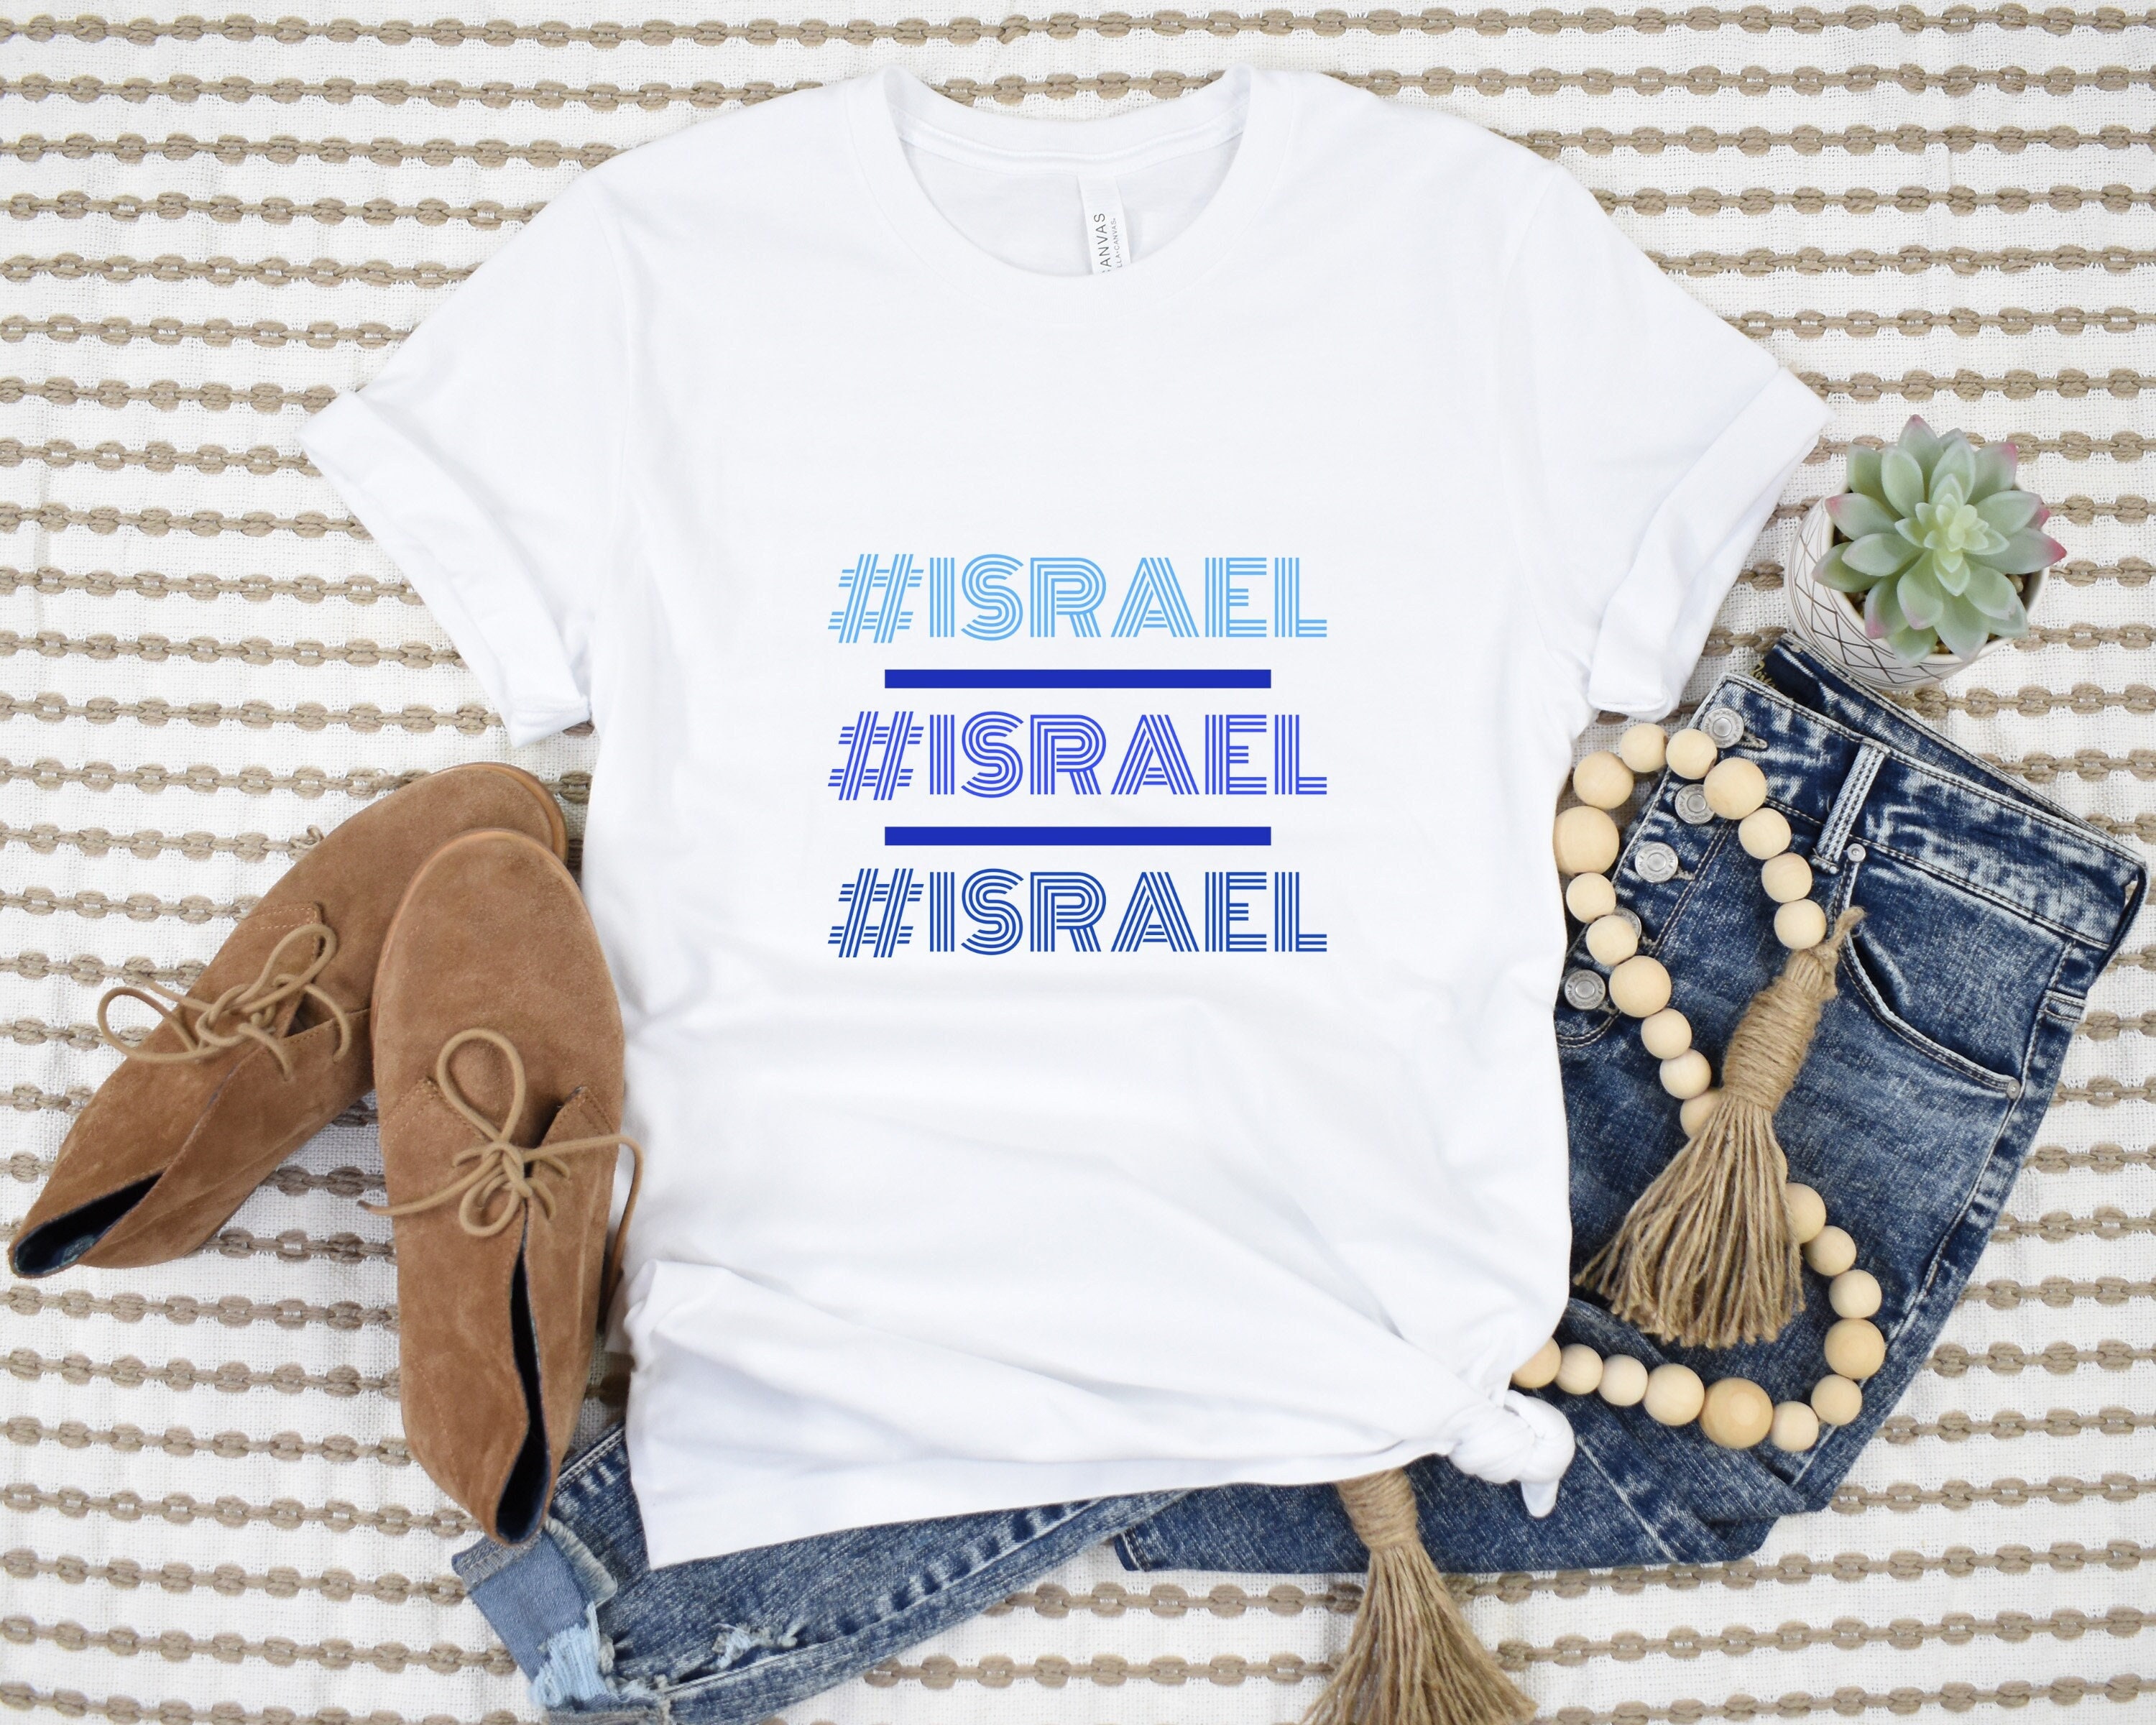 Women's Plain Short Sleeve Fringed T-Shirt with Fringes Sisters Hebrew Israelite Clothing Navy Border of Blue 12 Tribes Garment Apparel